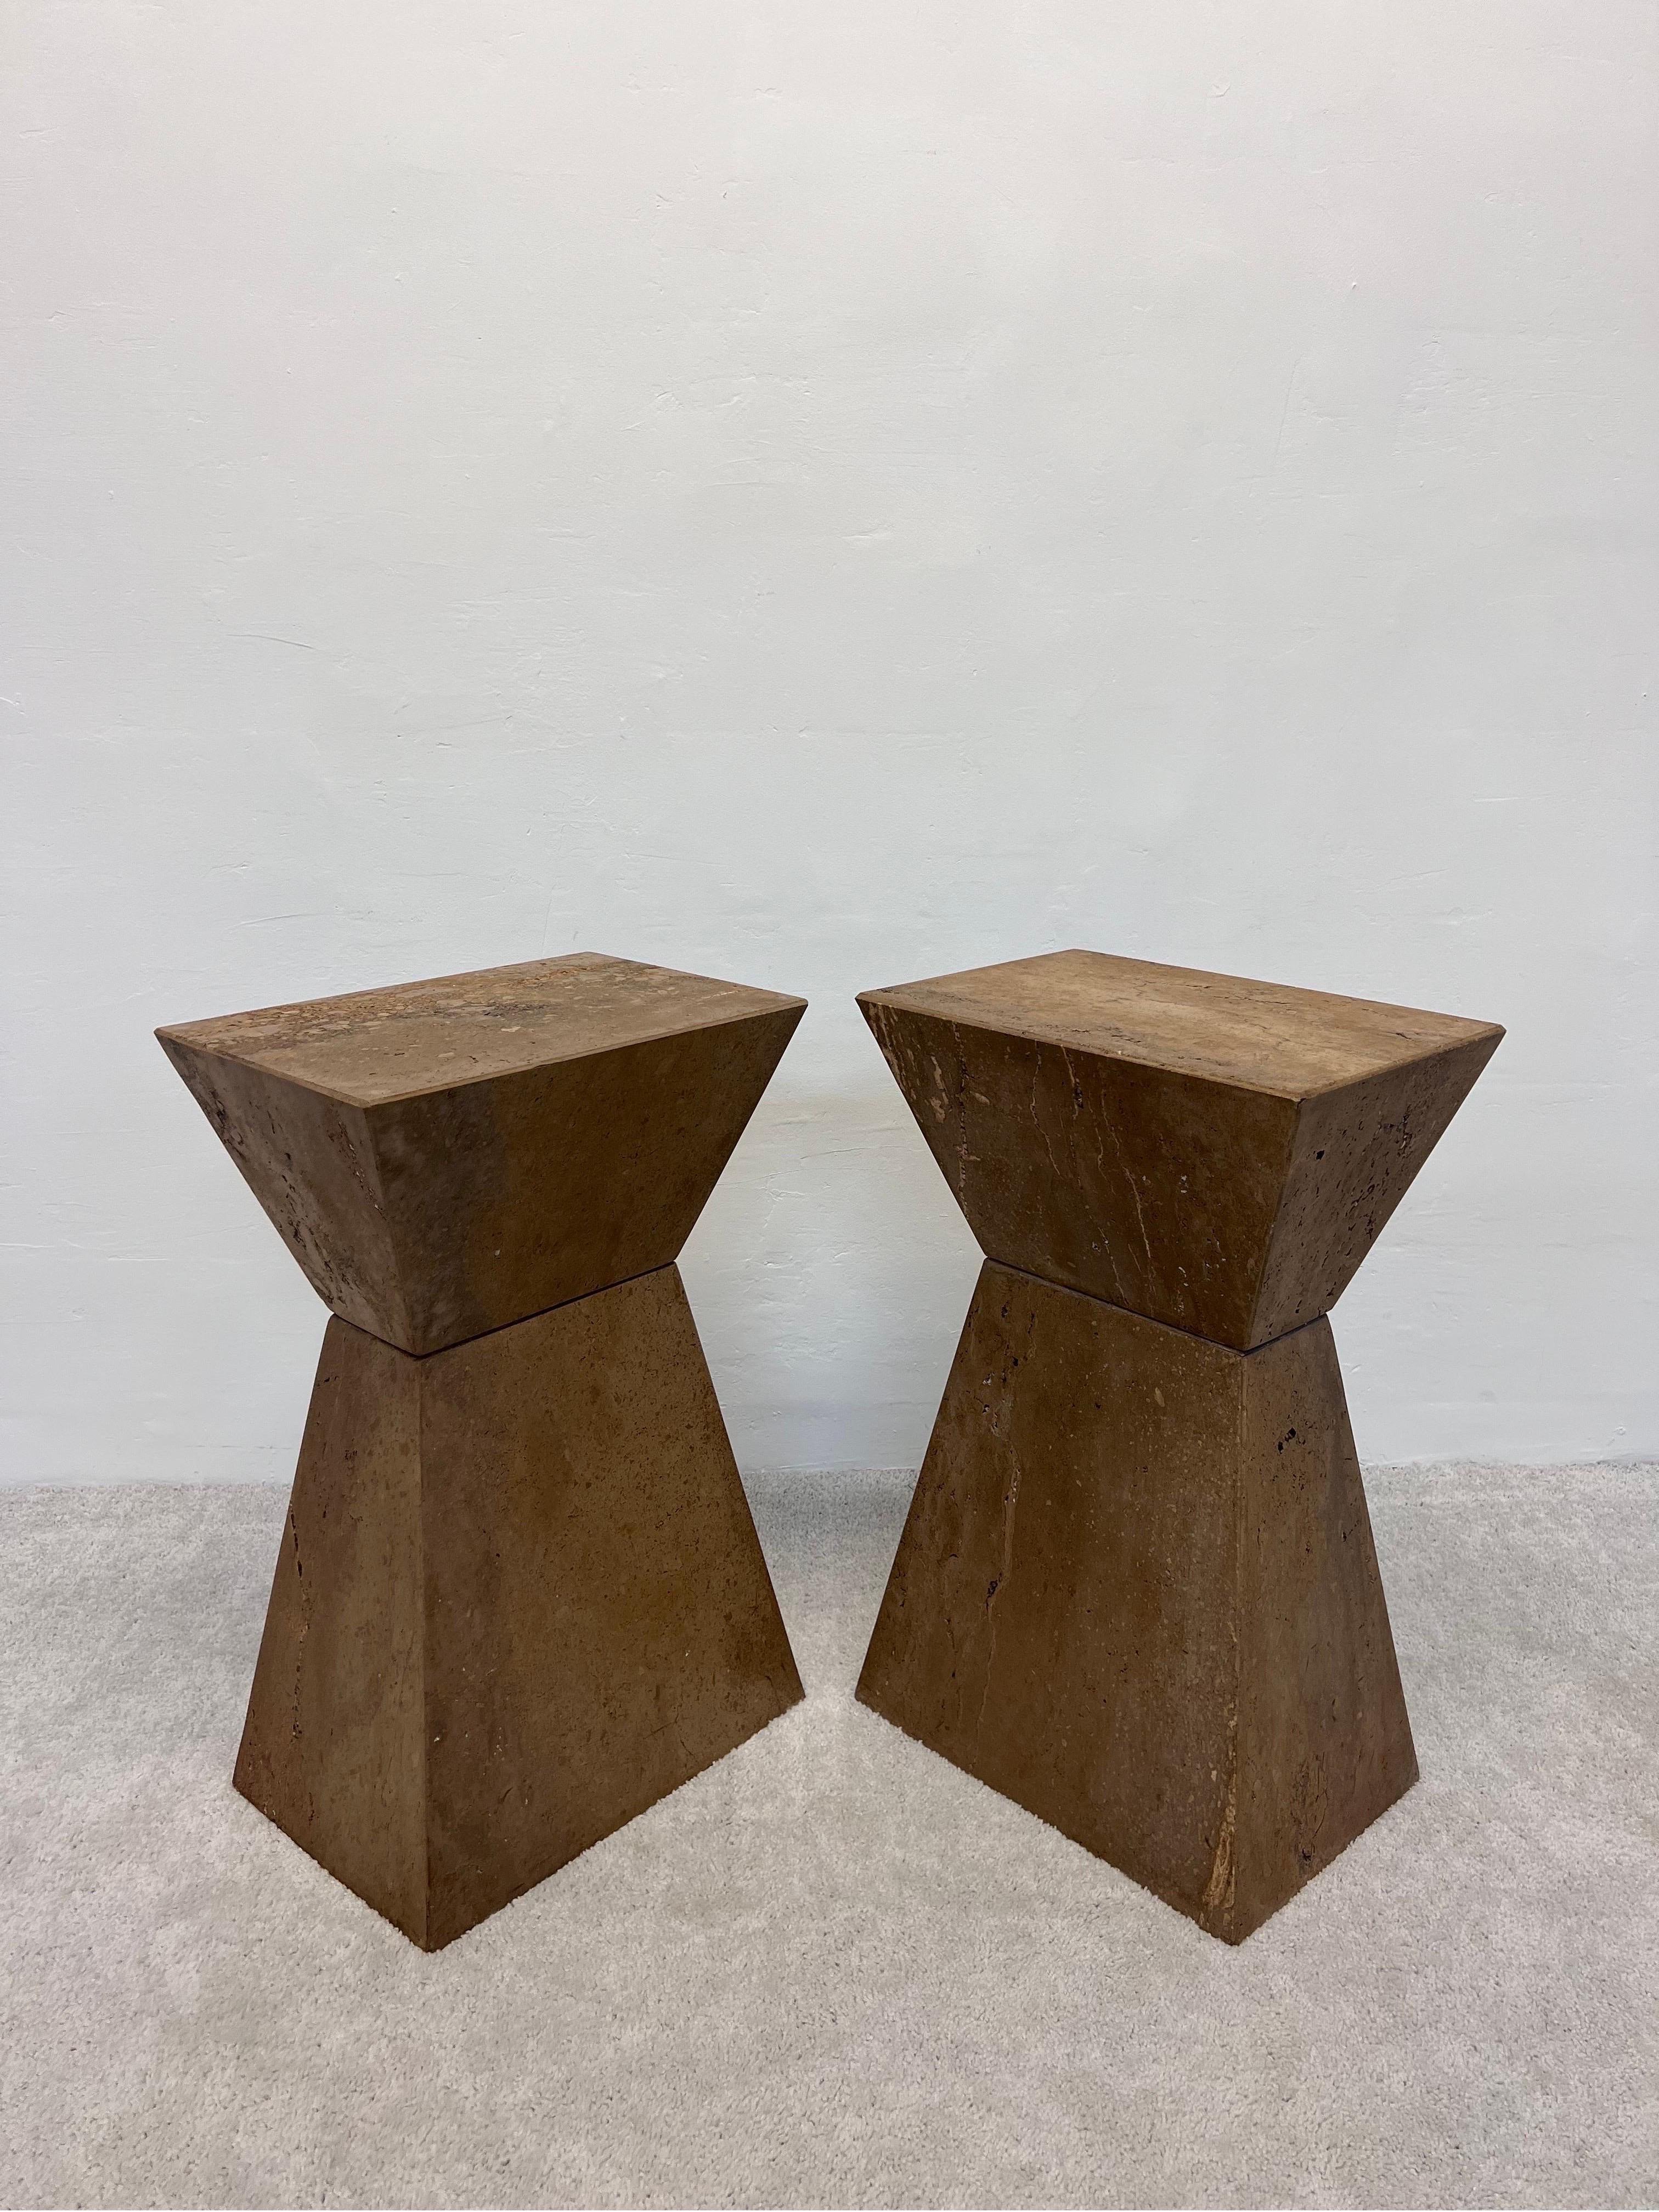 Geometric Faceted Italian Travertine Pedestal Tables, a Pair 1